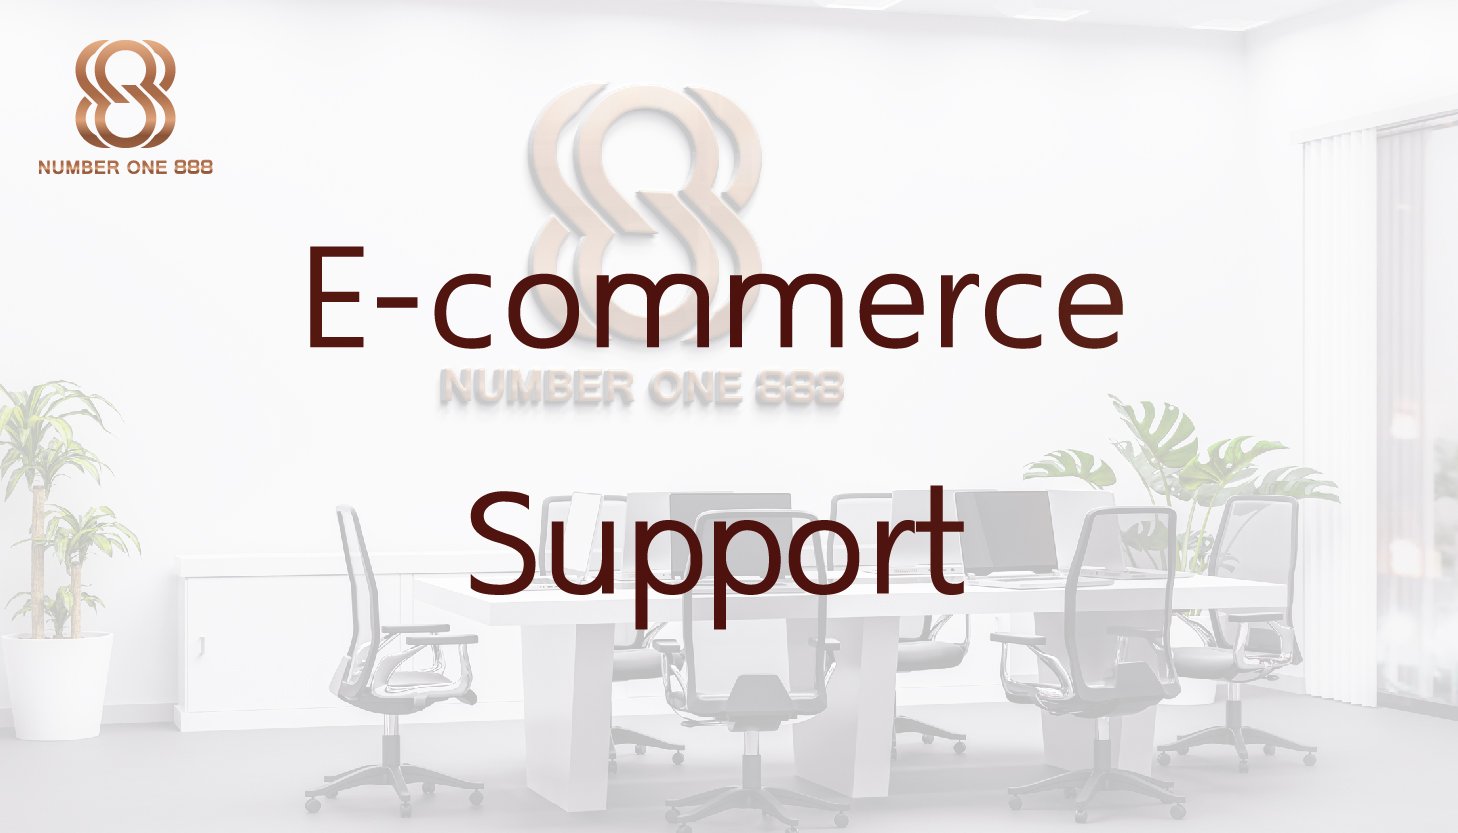 E-commerce Support